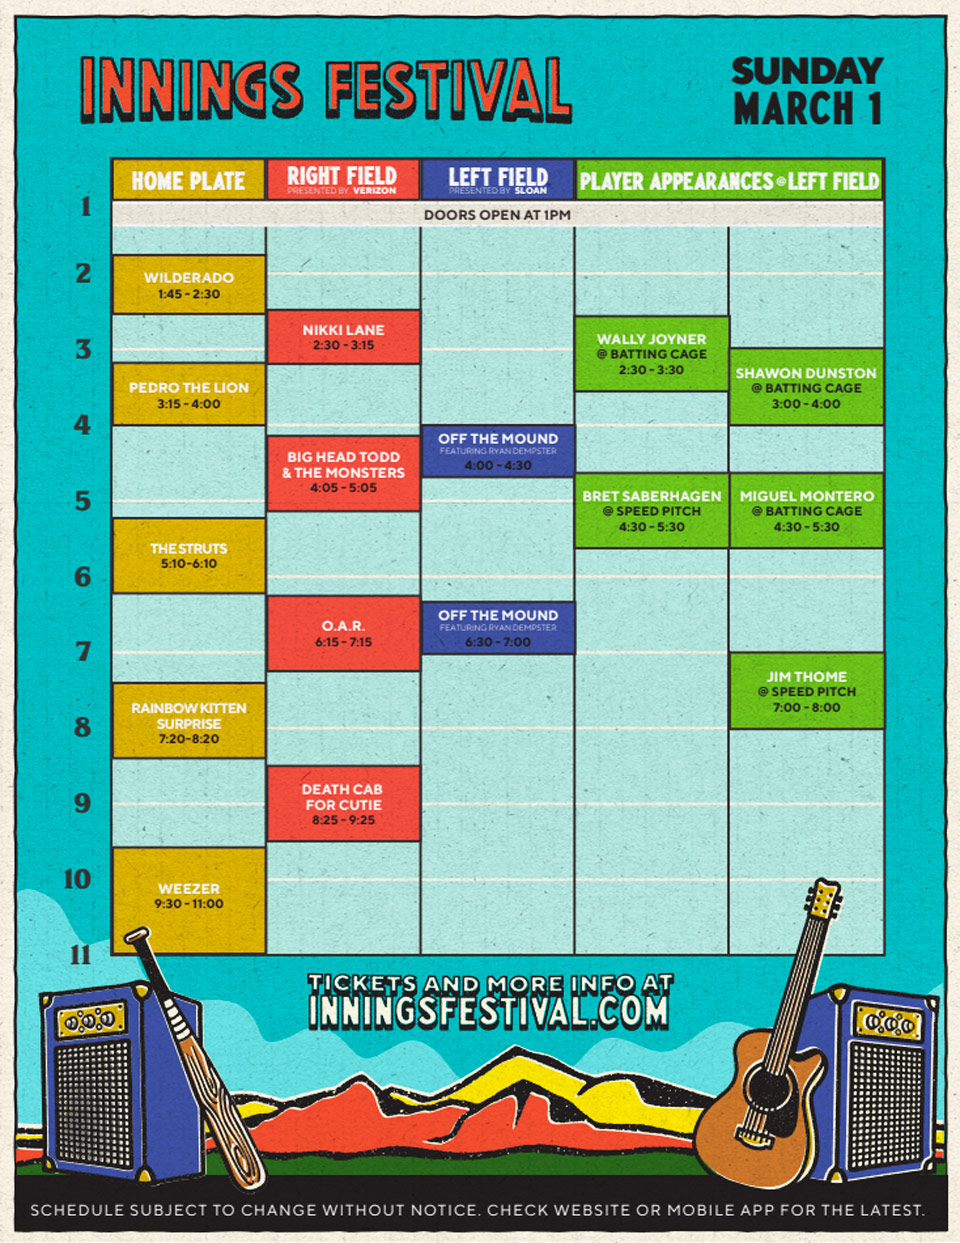 Innings Festival schedule 2020